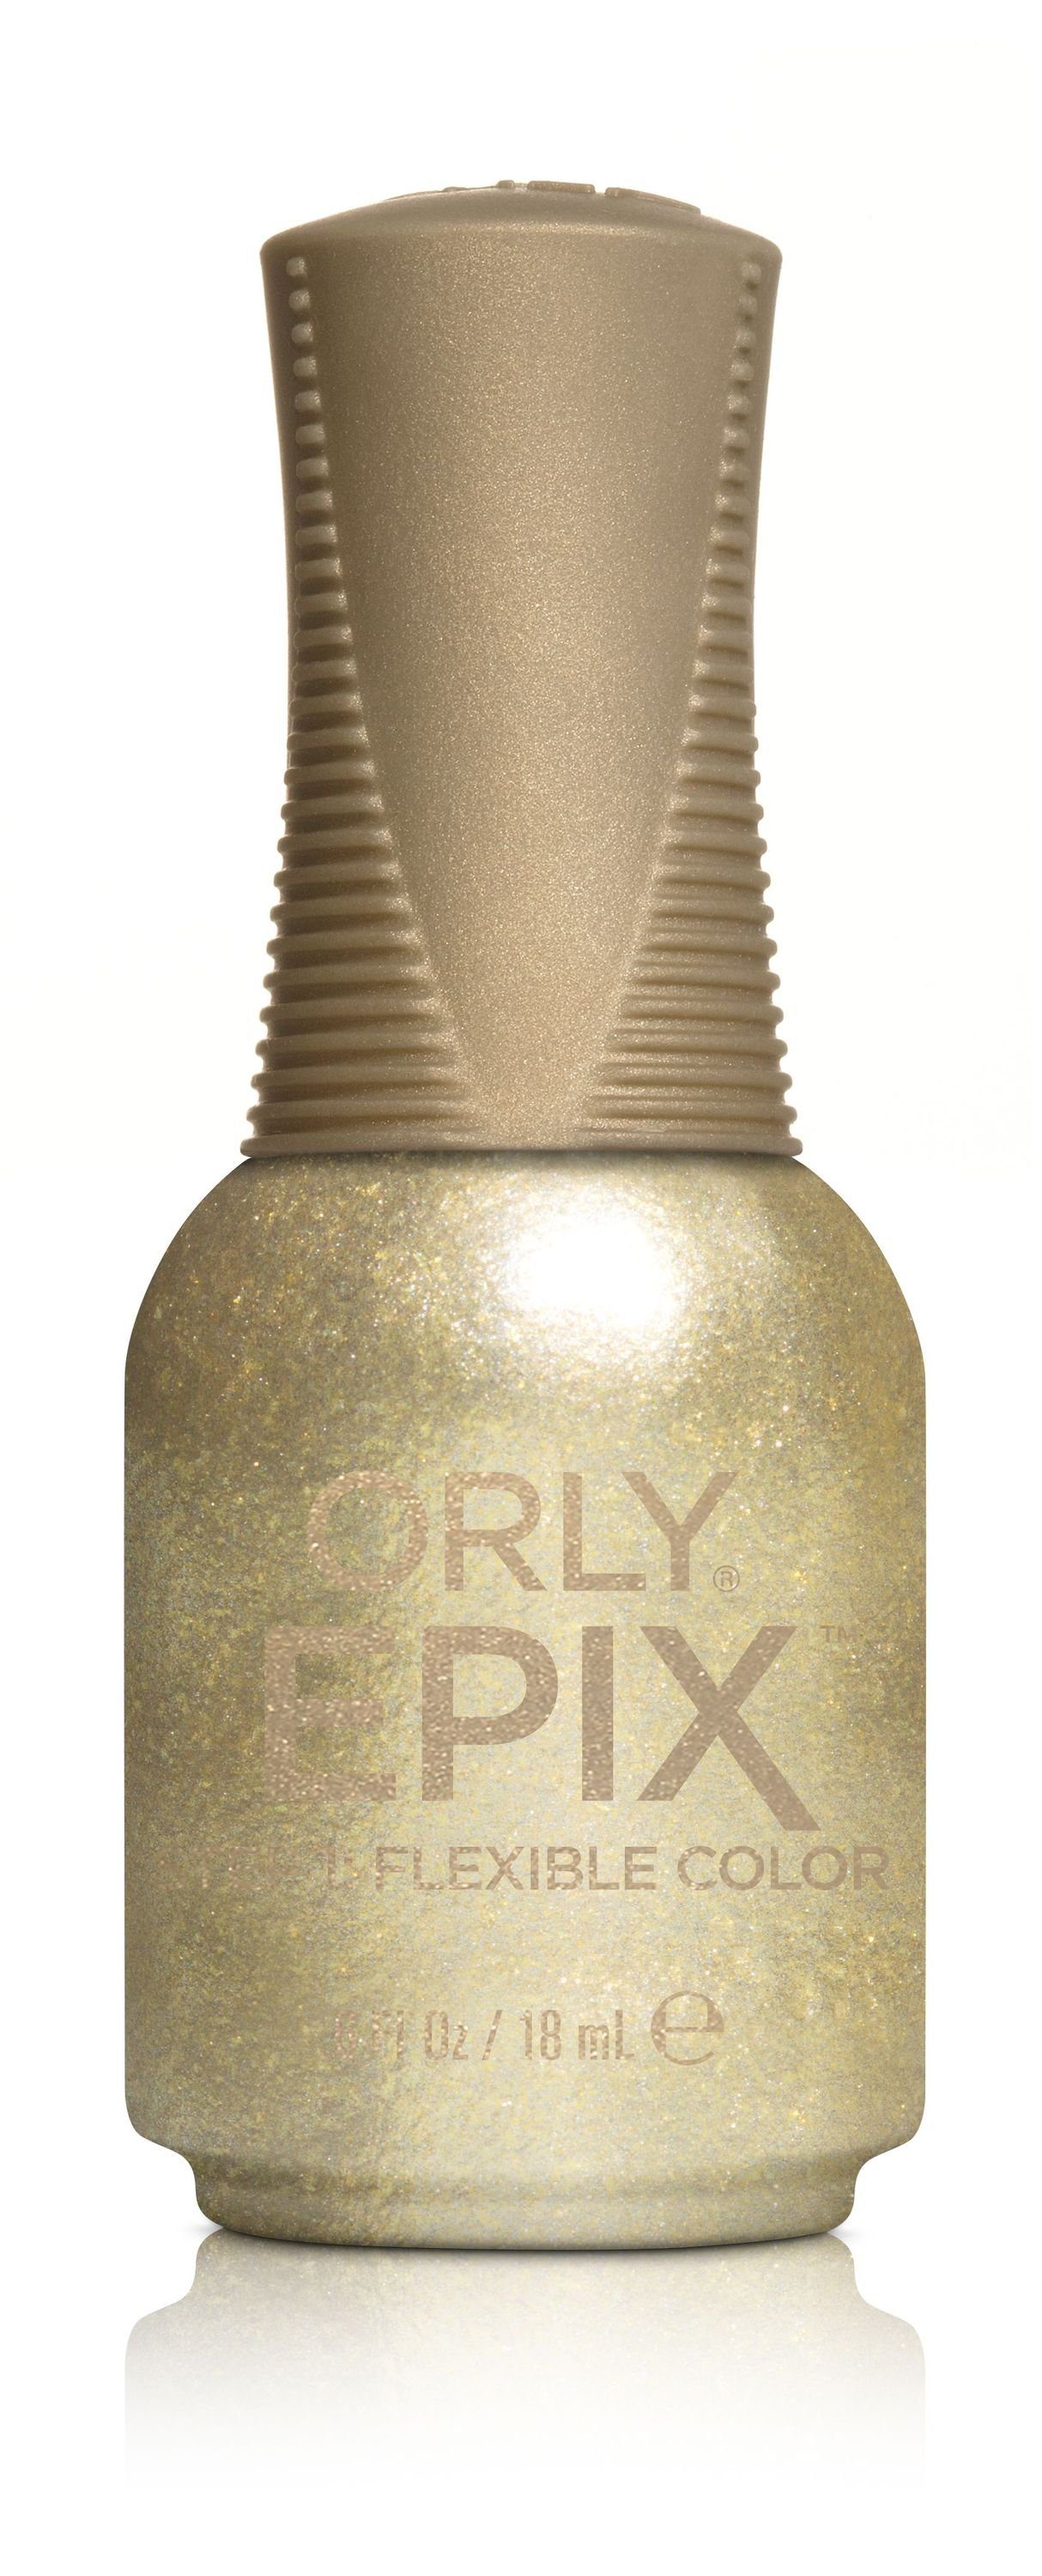 ORLY Nagellack ORLY - EPIX Flexible Color - Tinseltown, 18 ML | Nagellacke